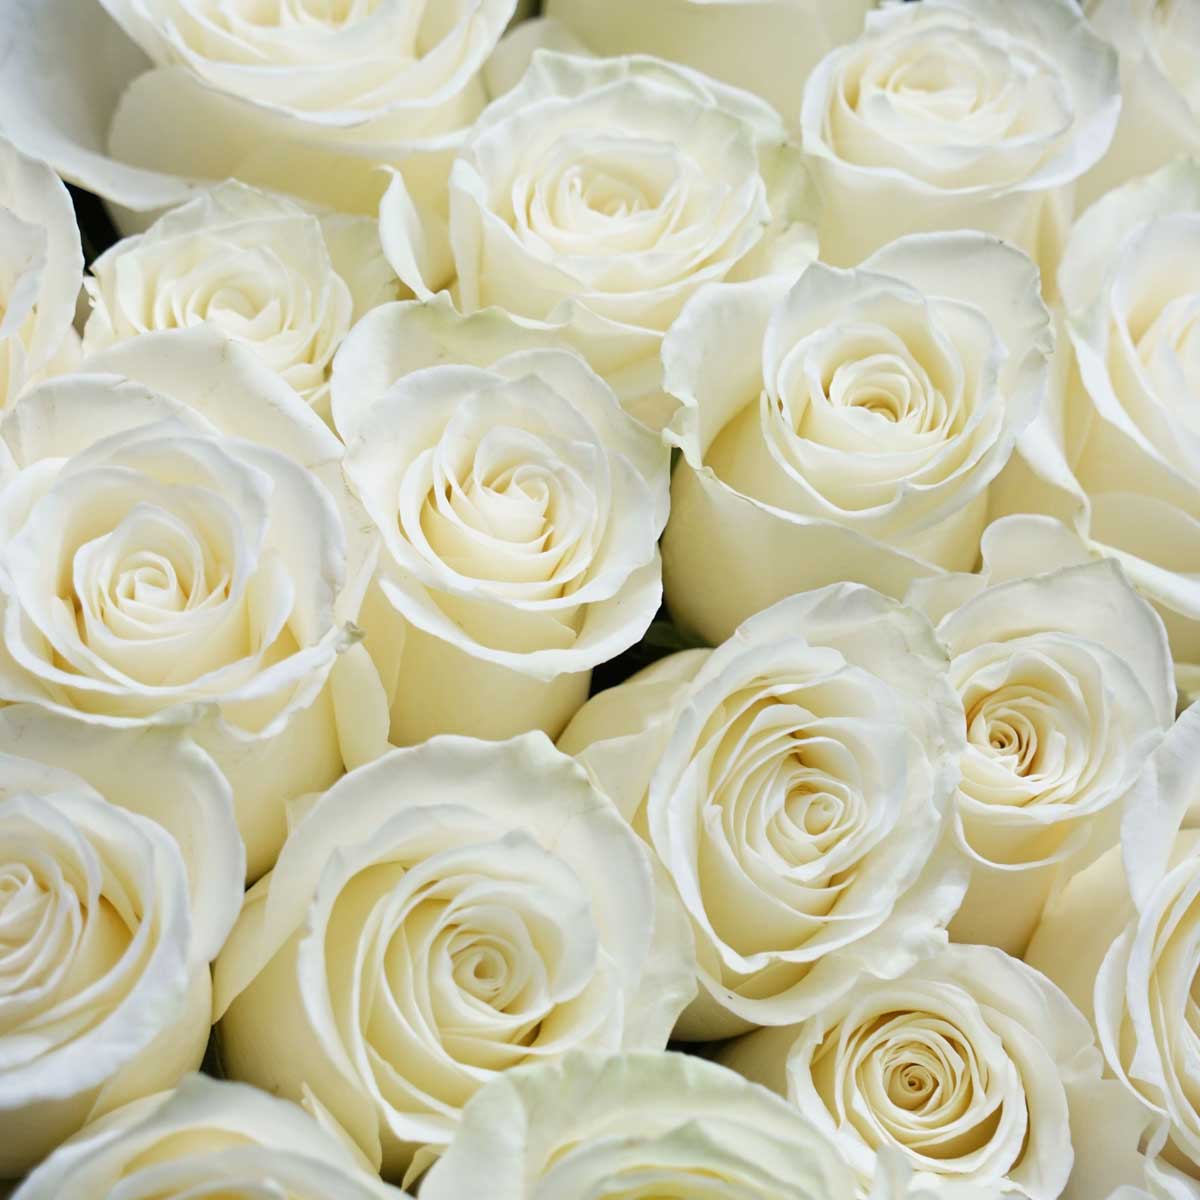 6 White Roses in a Vase